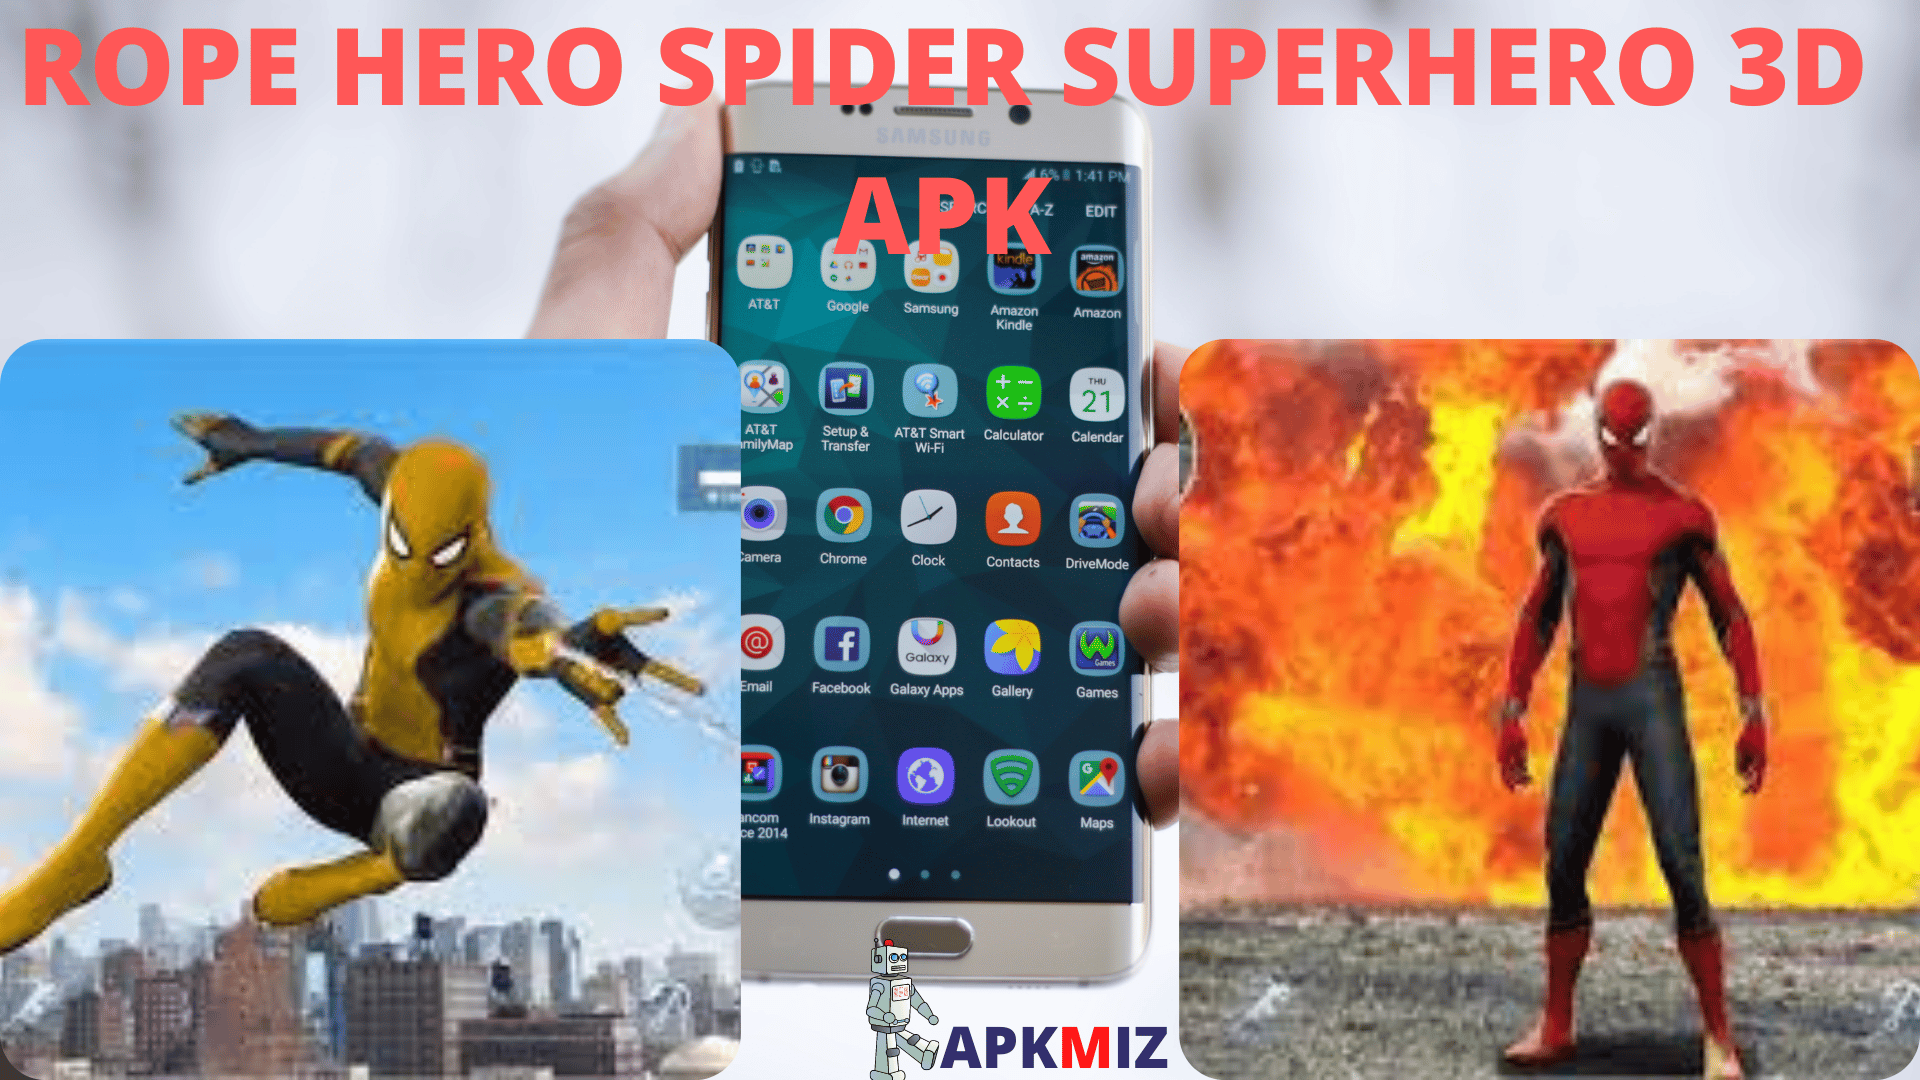 Rope Hero Spider Superhero 3D Apk